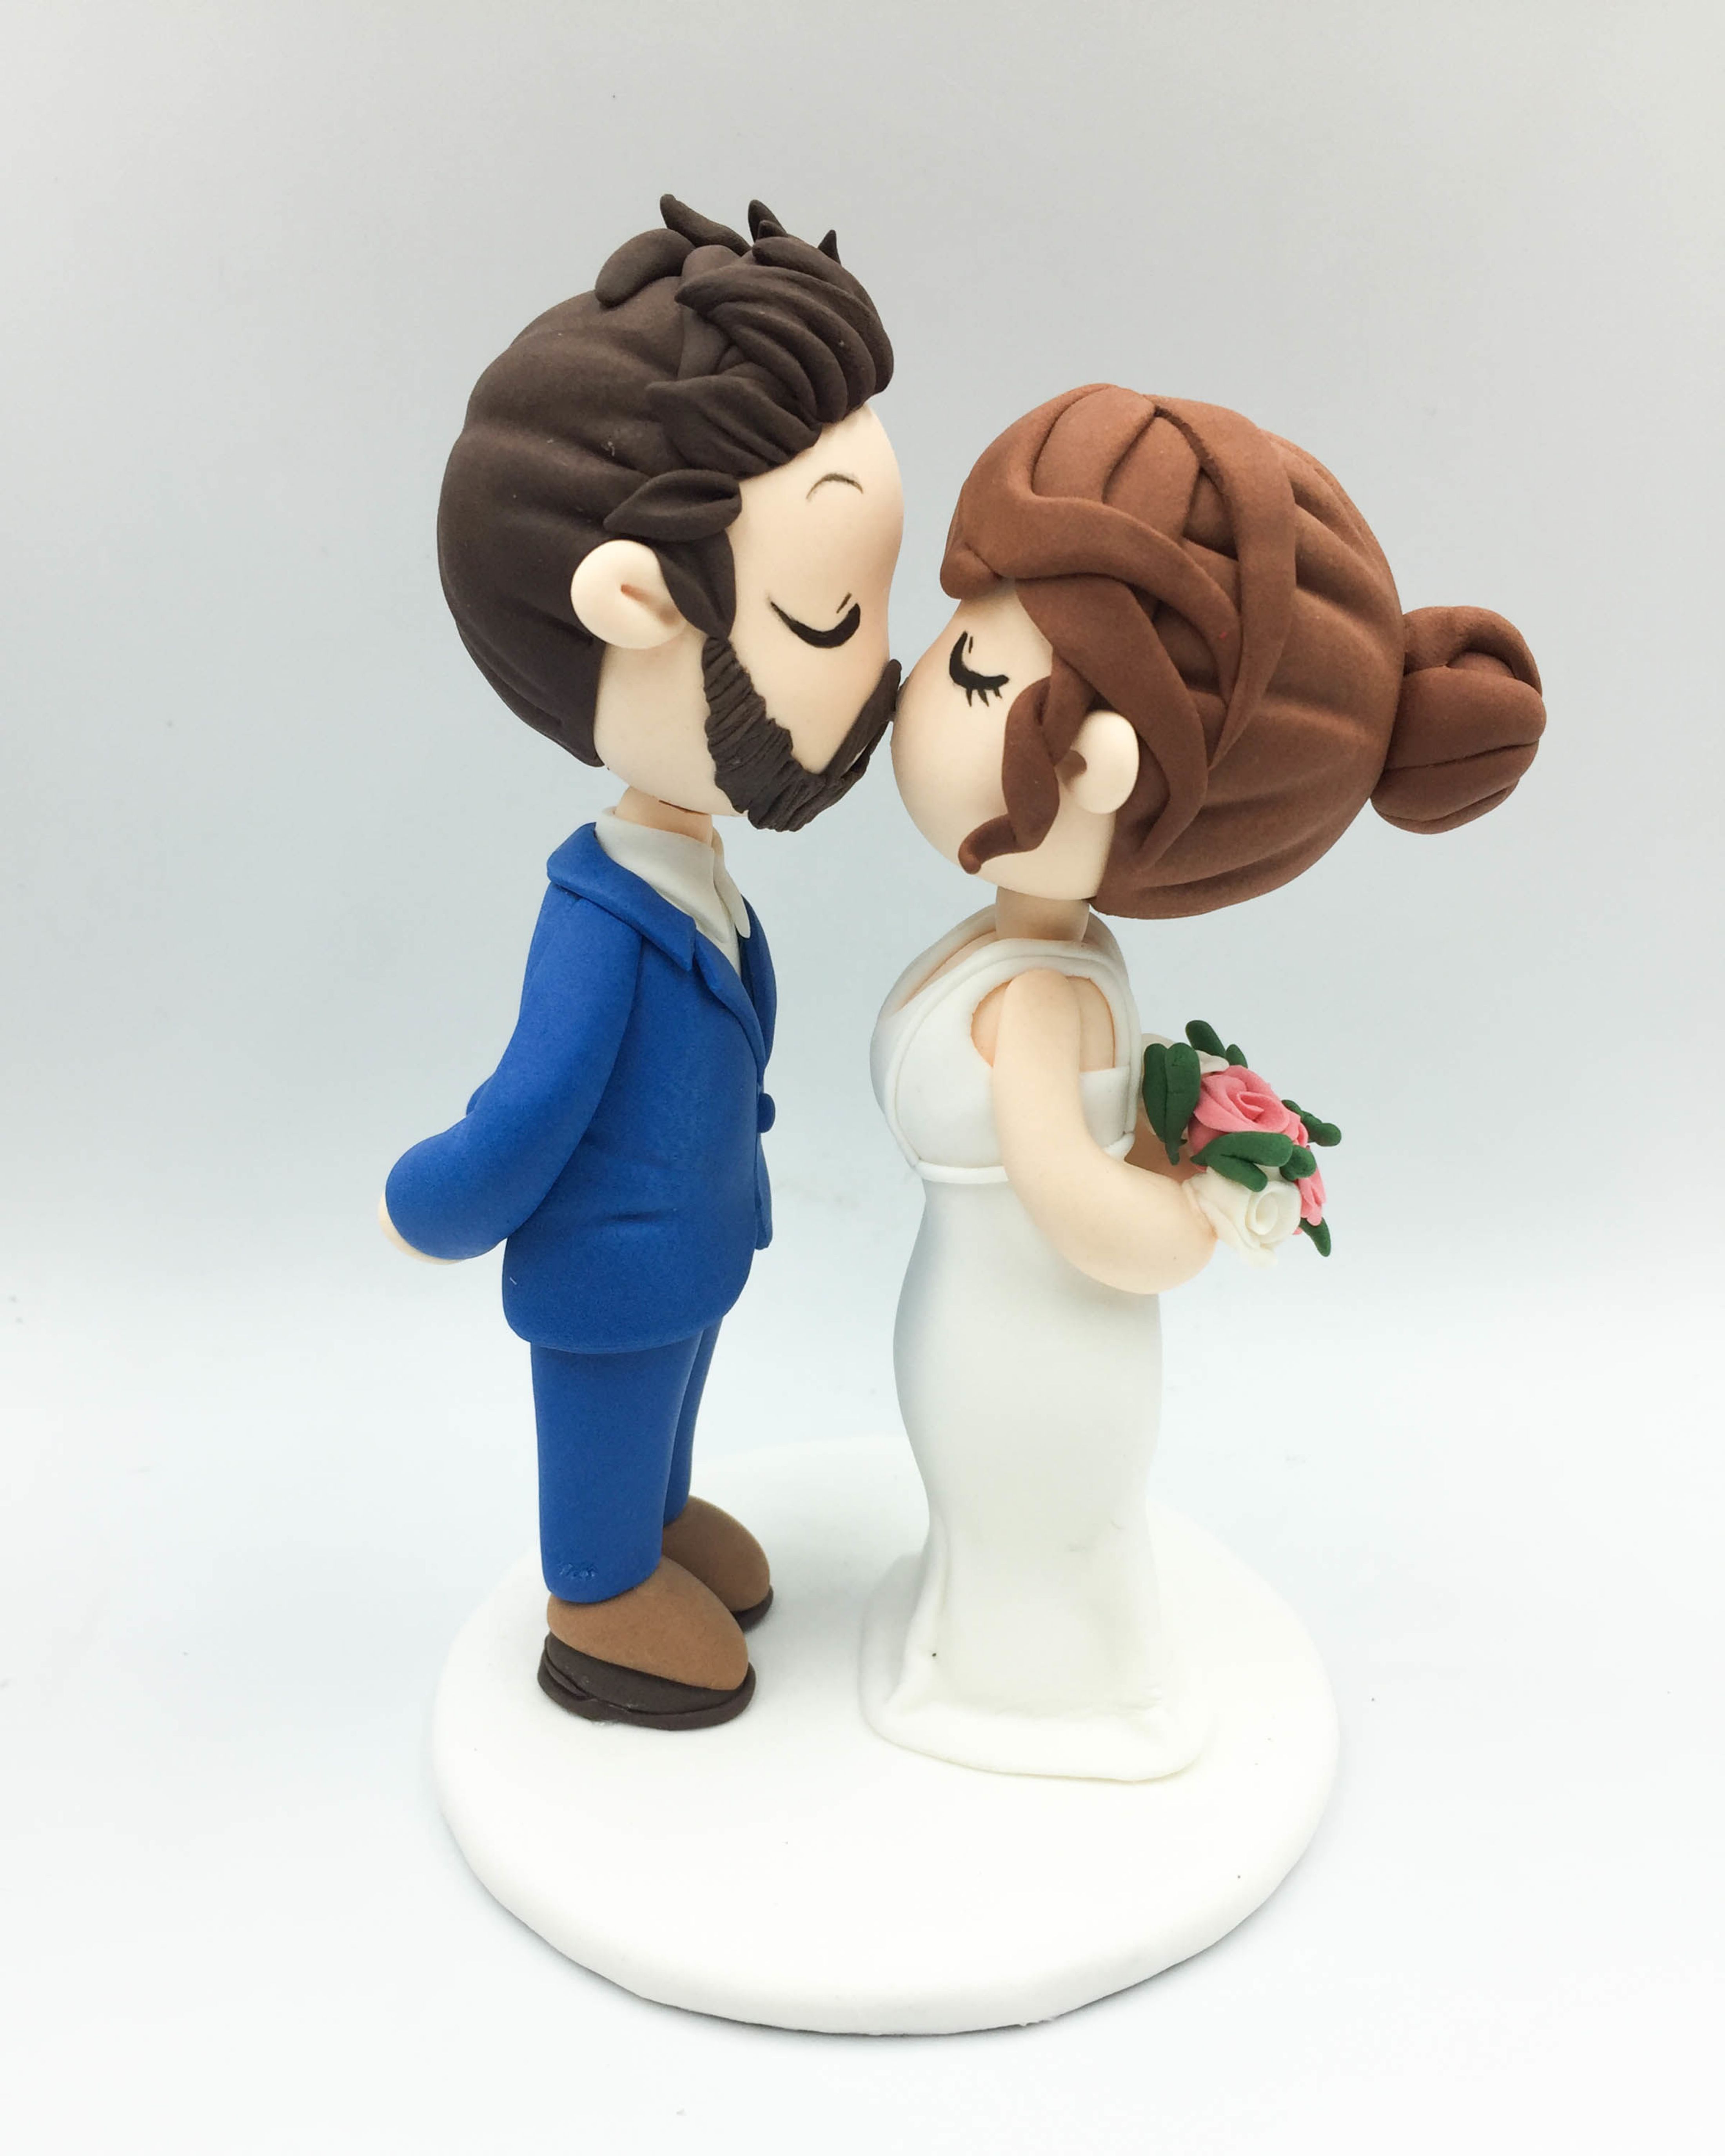 Picture of Full Beard Groom and Mermaid Wedding Dress Bride Wedding Cake Topper